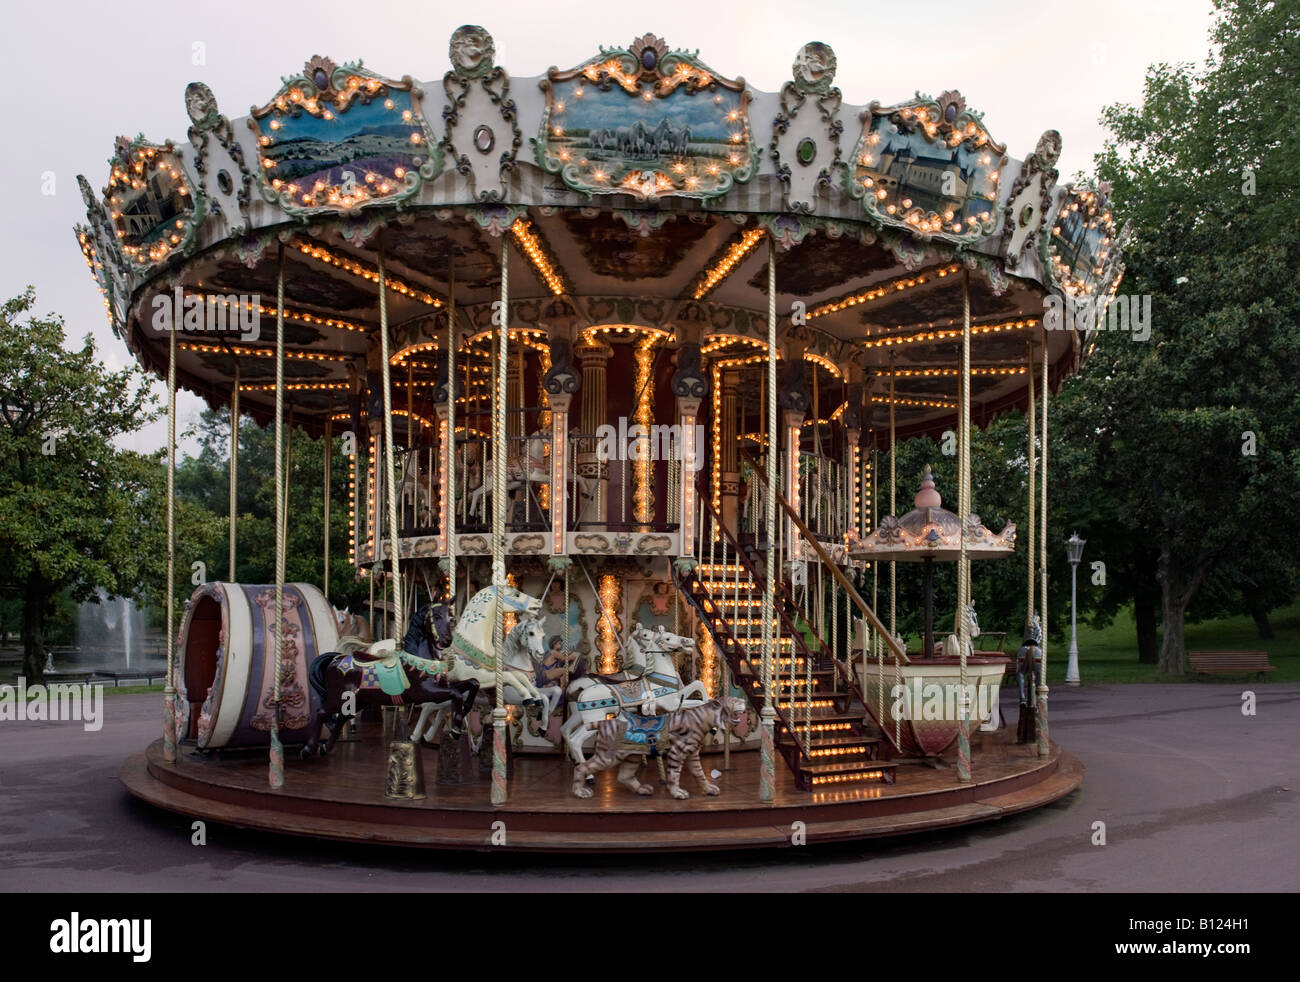 Carousel in city park Stock Photo